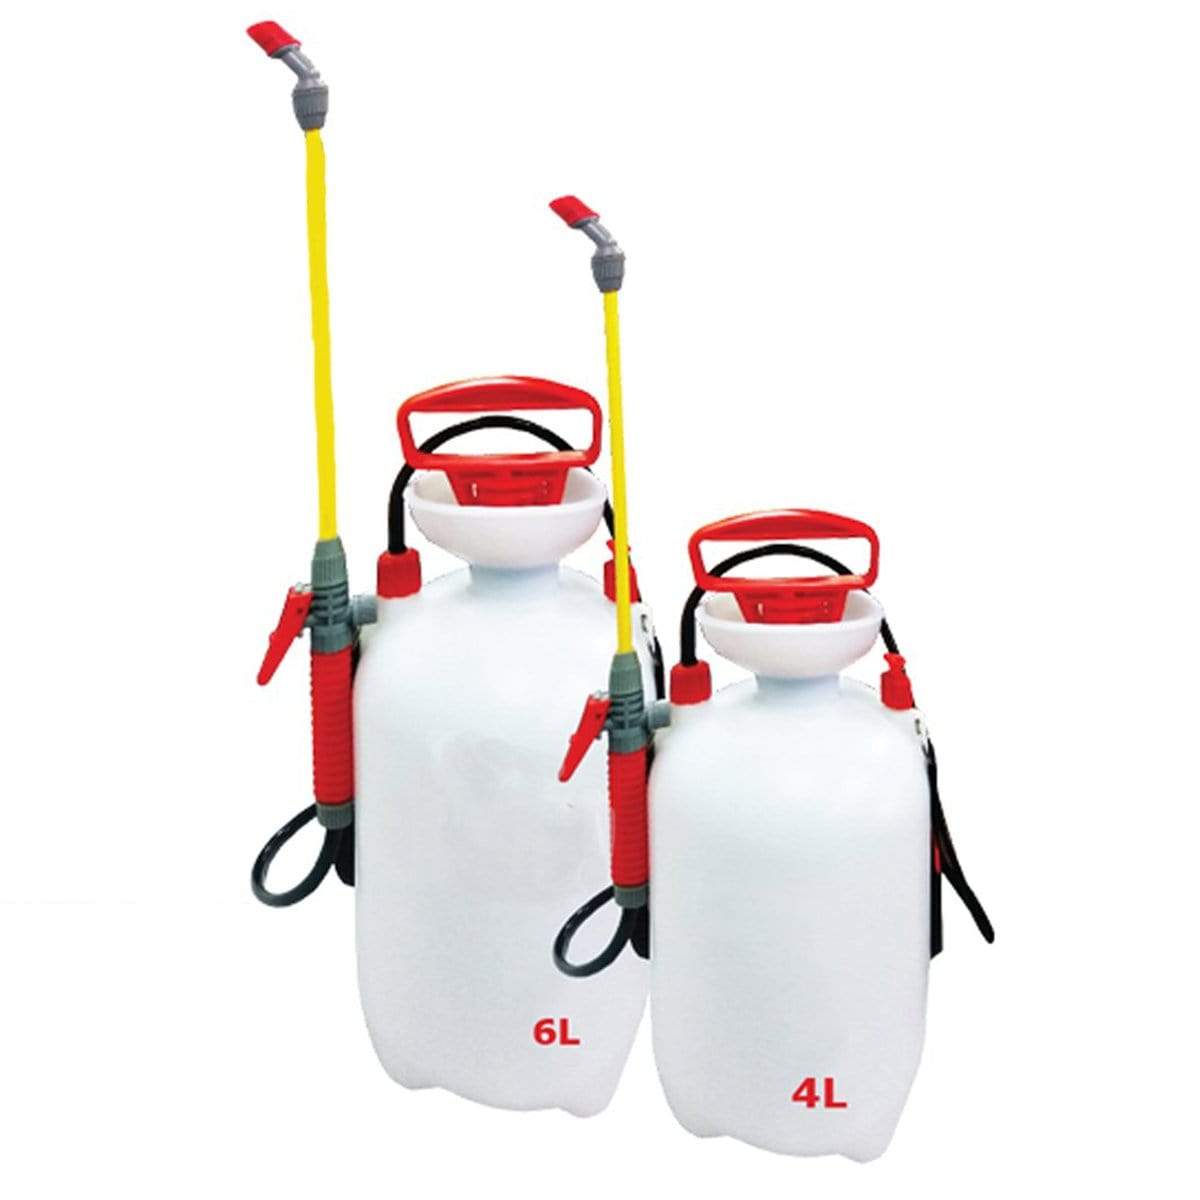 ANEKA Pressure Sprayer Manual Pump Garden Sprayer 6L ITS 6L